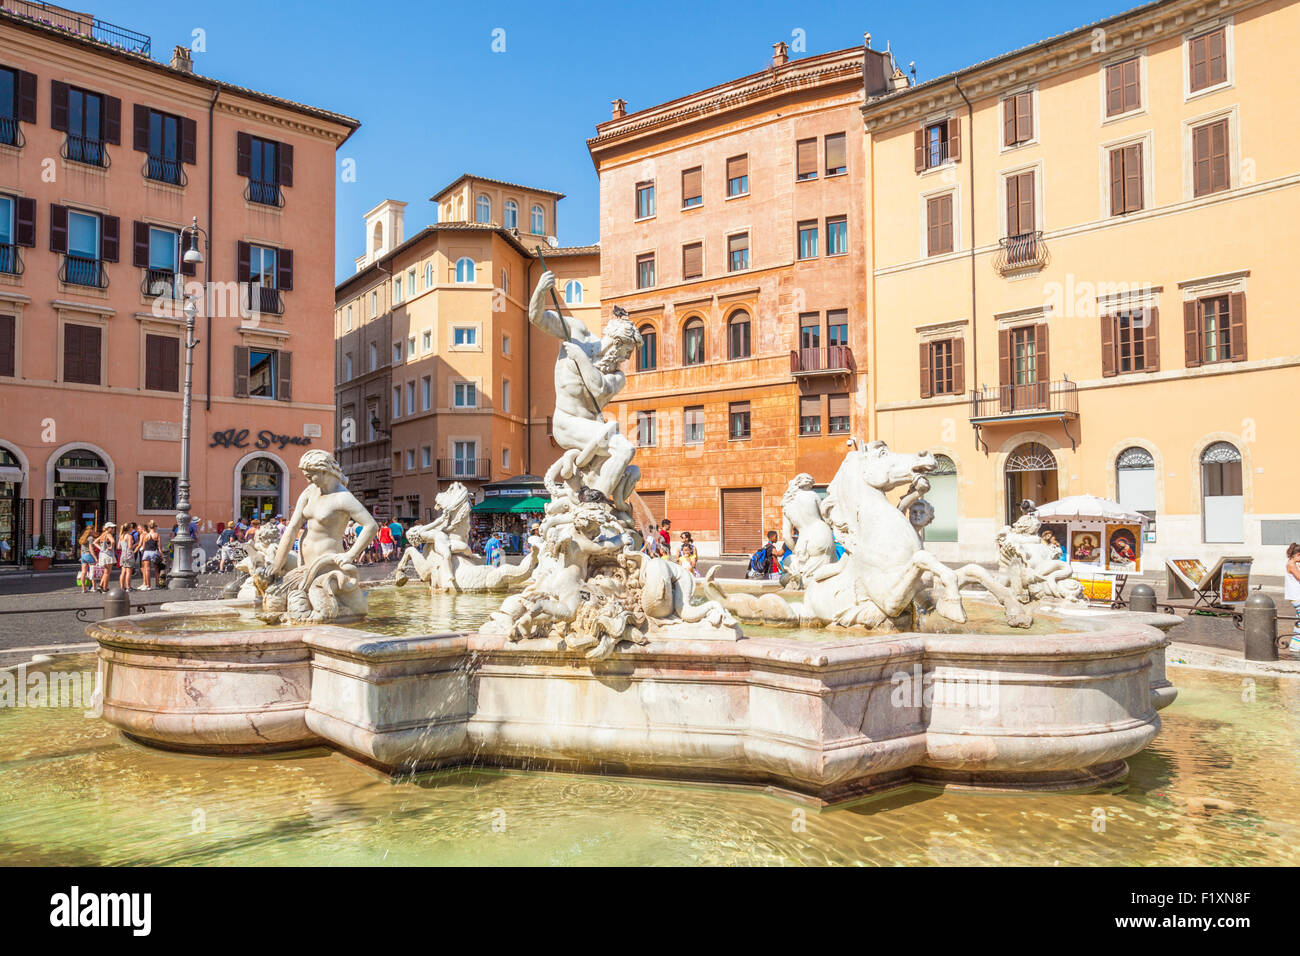 Fontana del Nettuno or fountain of neptune Piazza Navona Rome italy Roma lazio italy eu europe Stock Photo